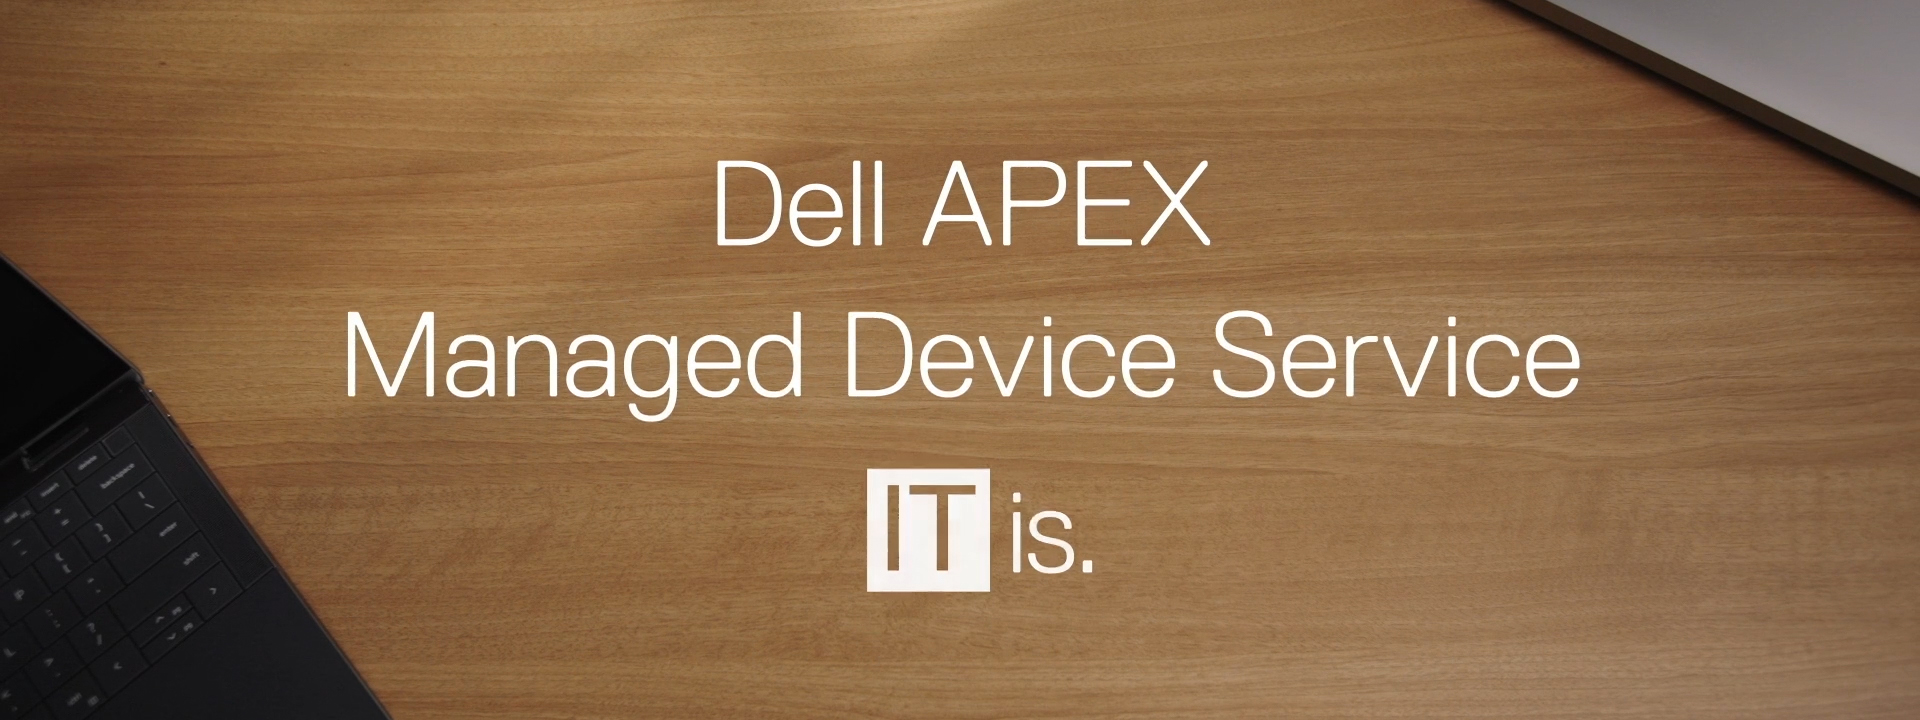 Dell APEX Managed Device Service